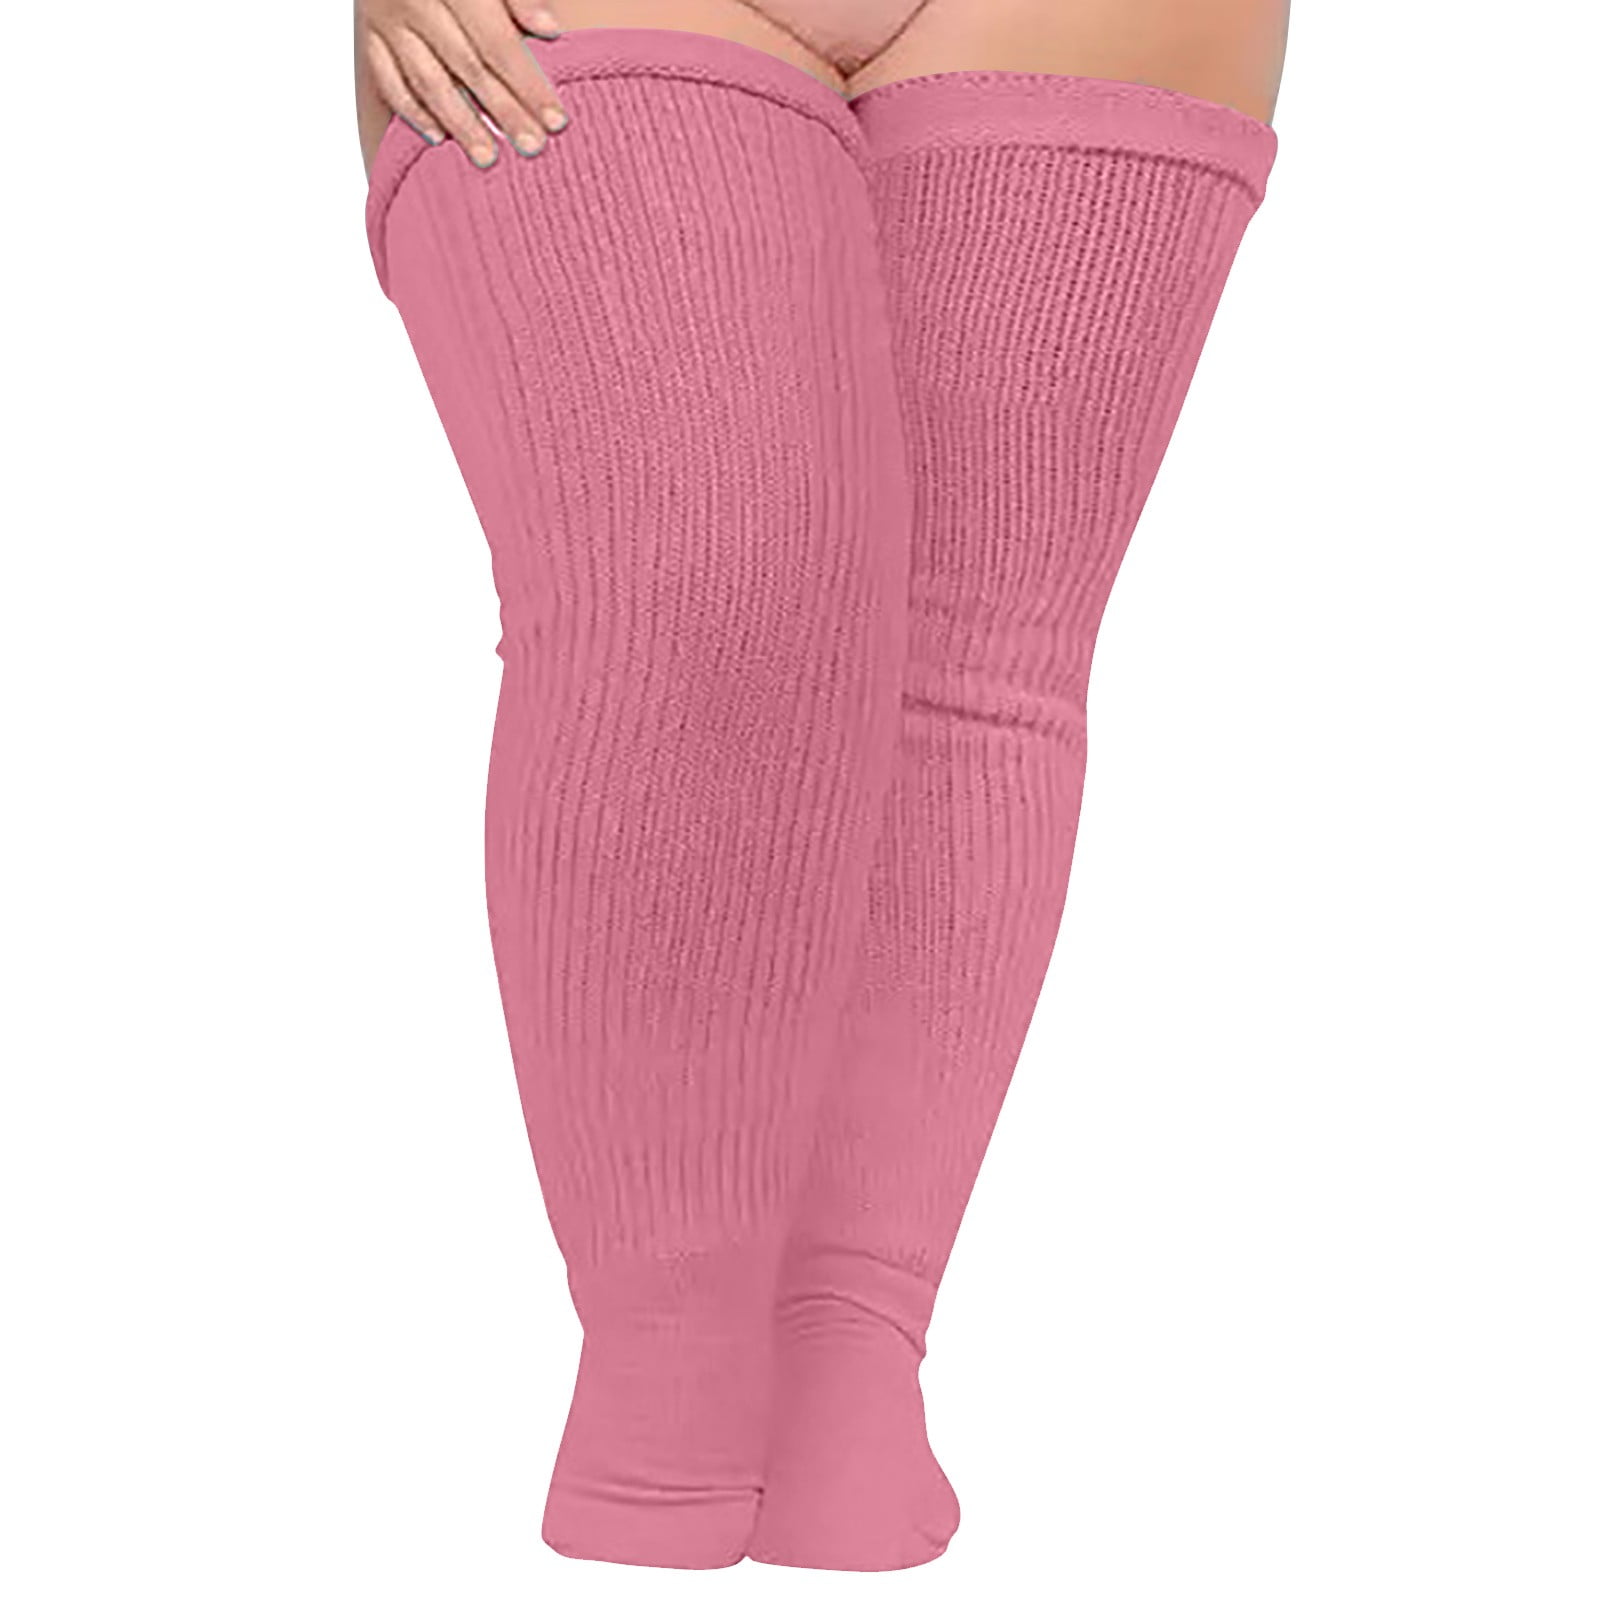 Eguiwyn Promotion Sale, Compression Socks for Men Women Soild Plus Size ...